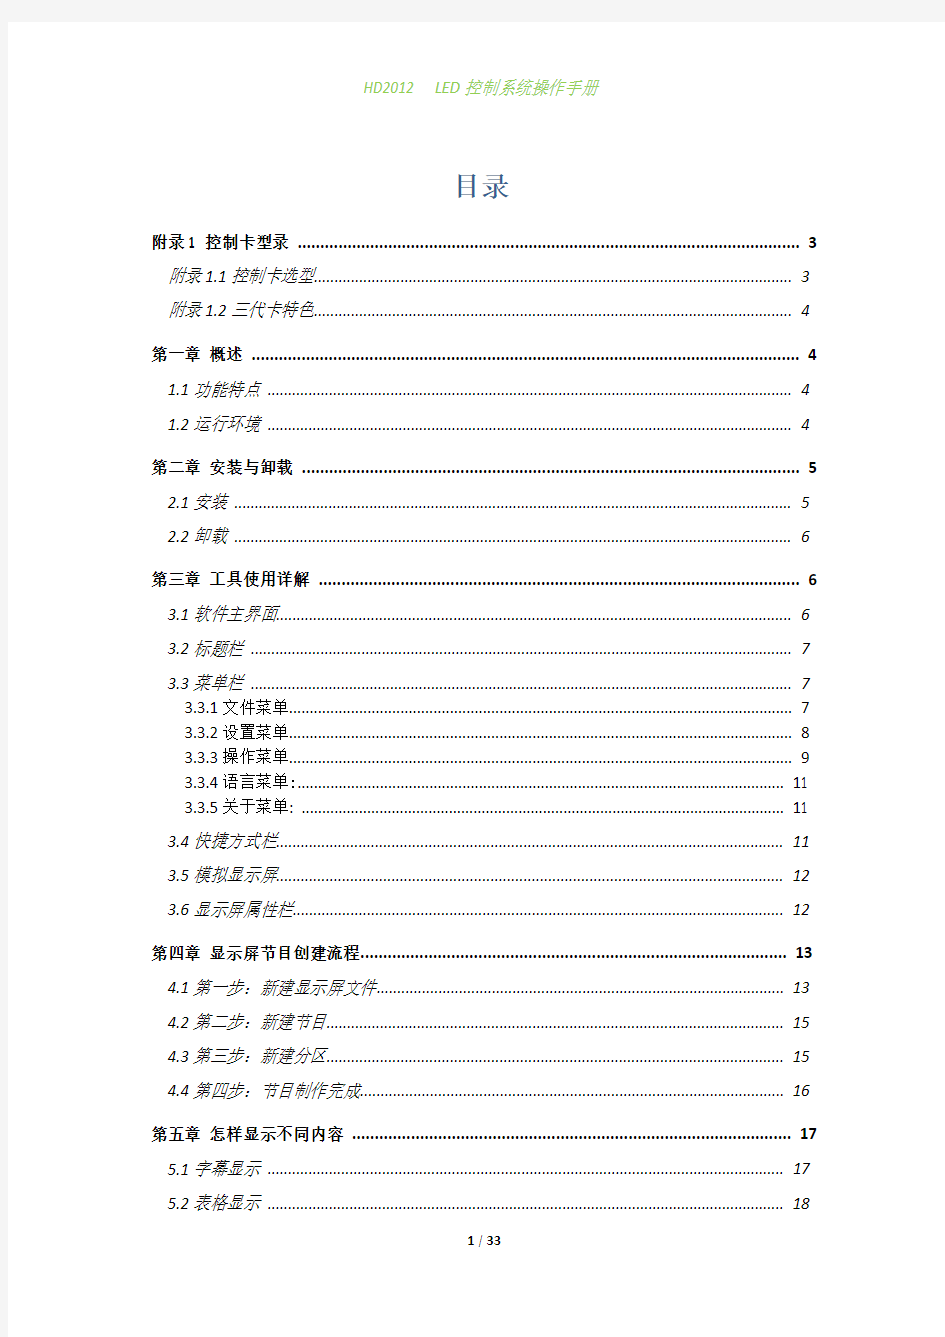 HD2013 中文操作手册